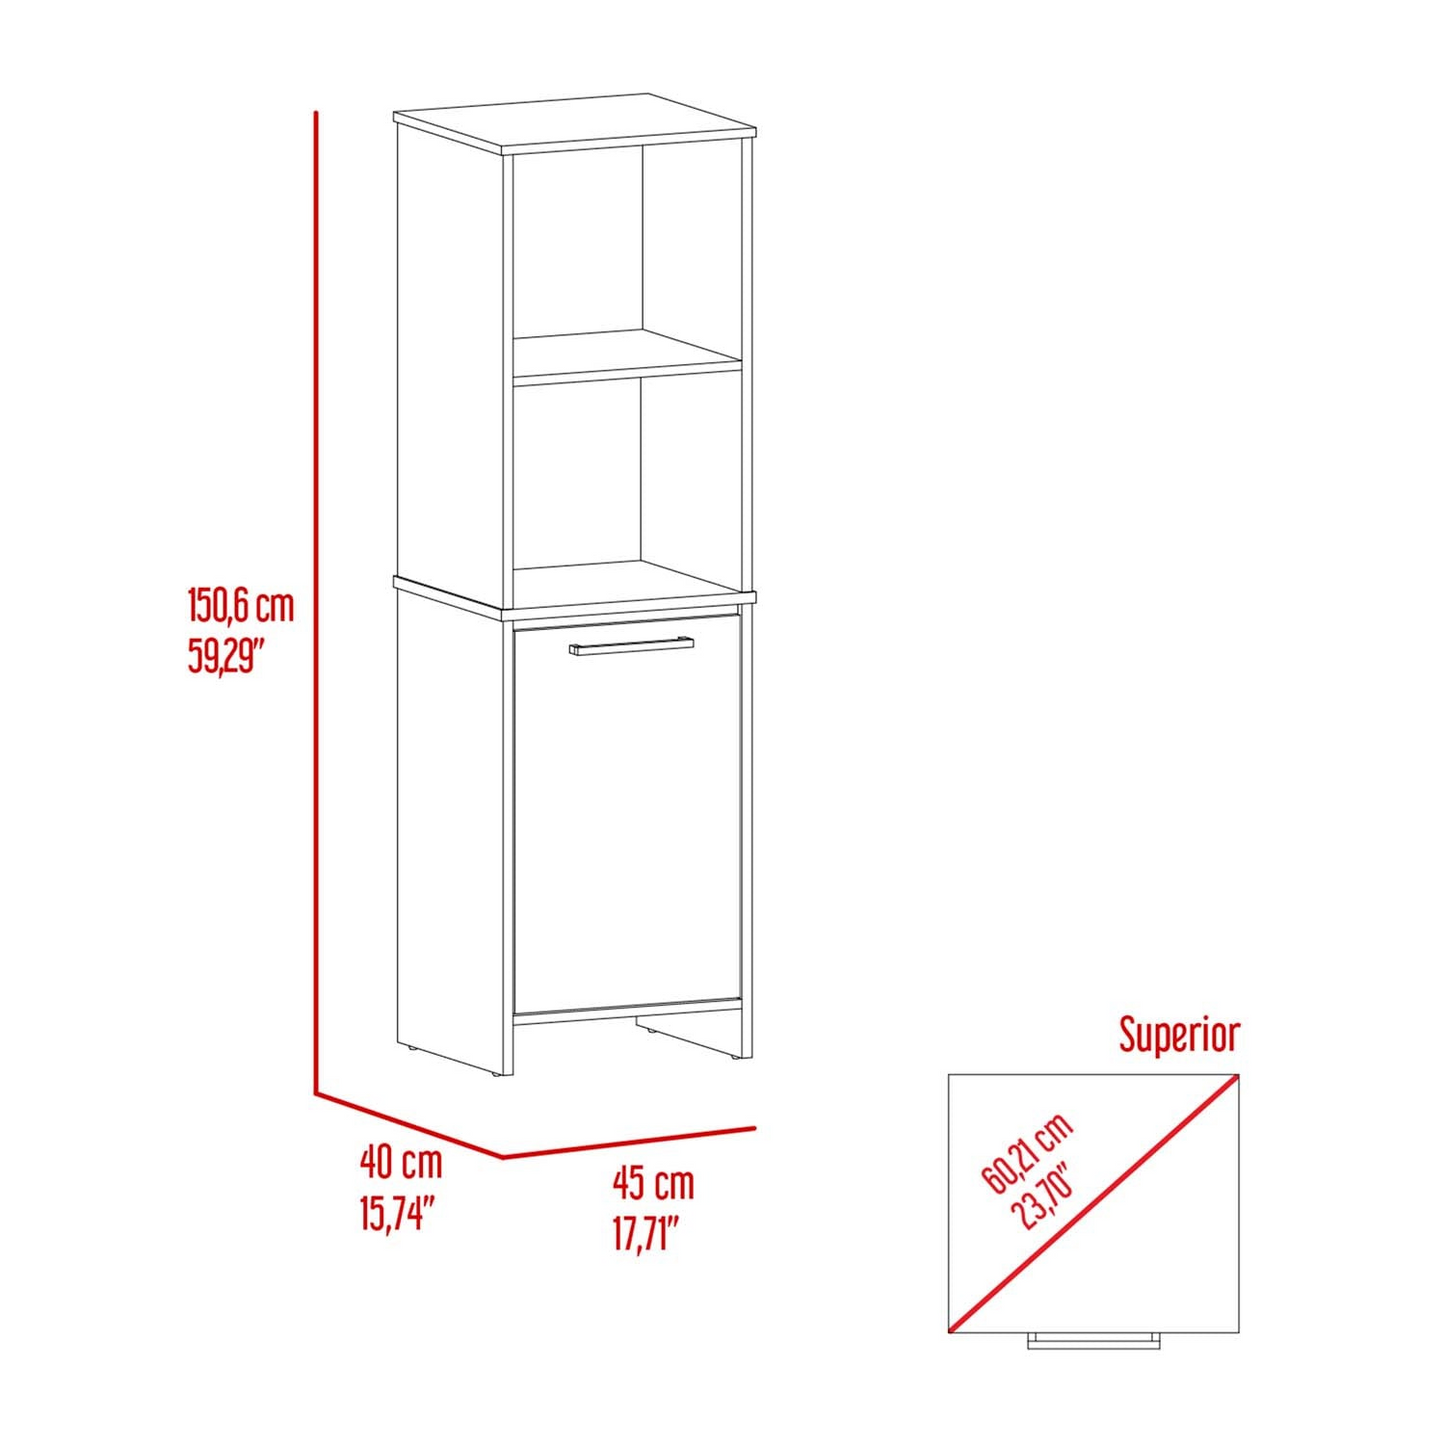 Romulo Kitchen Pantry, Two External Shelves, Single Door Cabinet, Two Interior Shelves